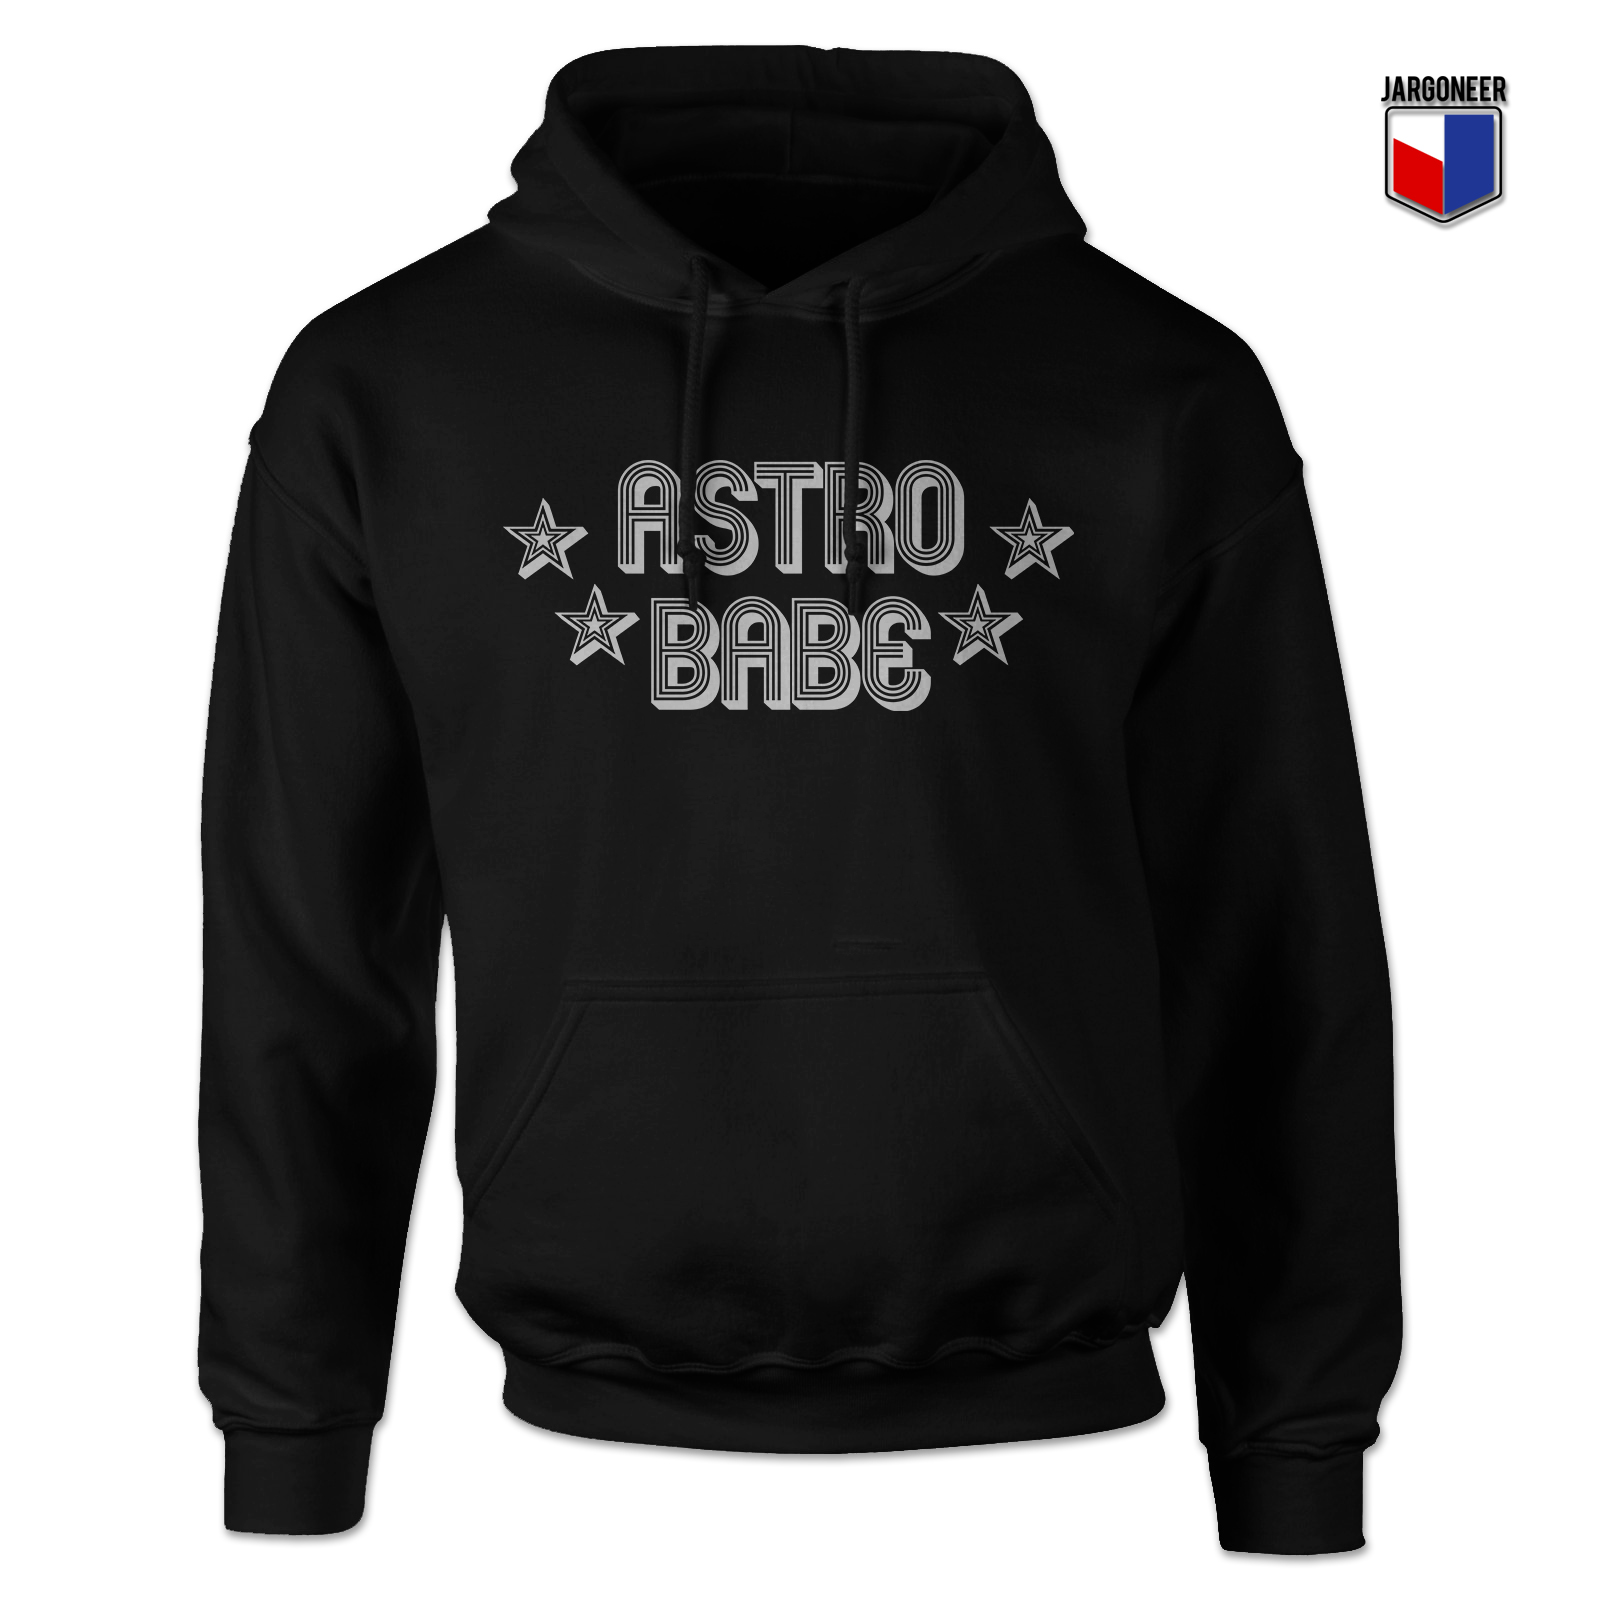 Astro Babe Black Hoody - Shop Unique Graphic Cool Shirt Designs